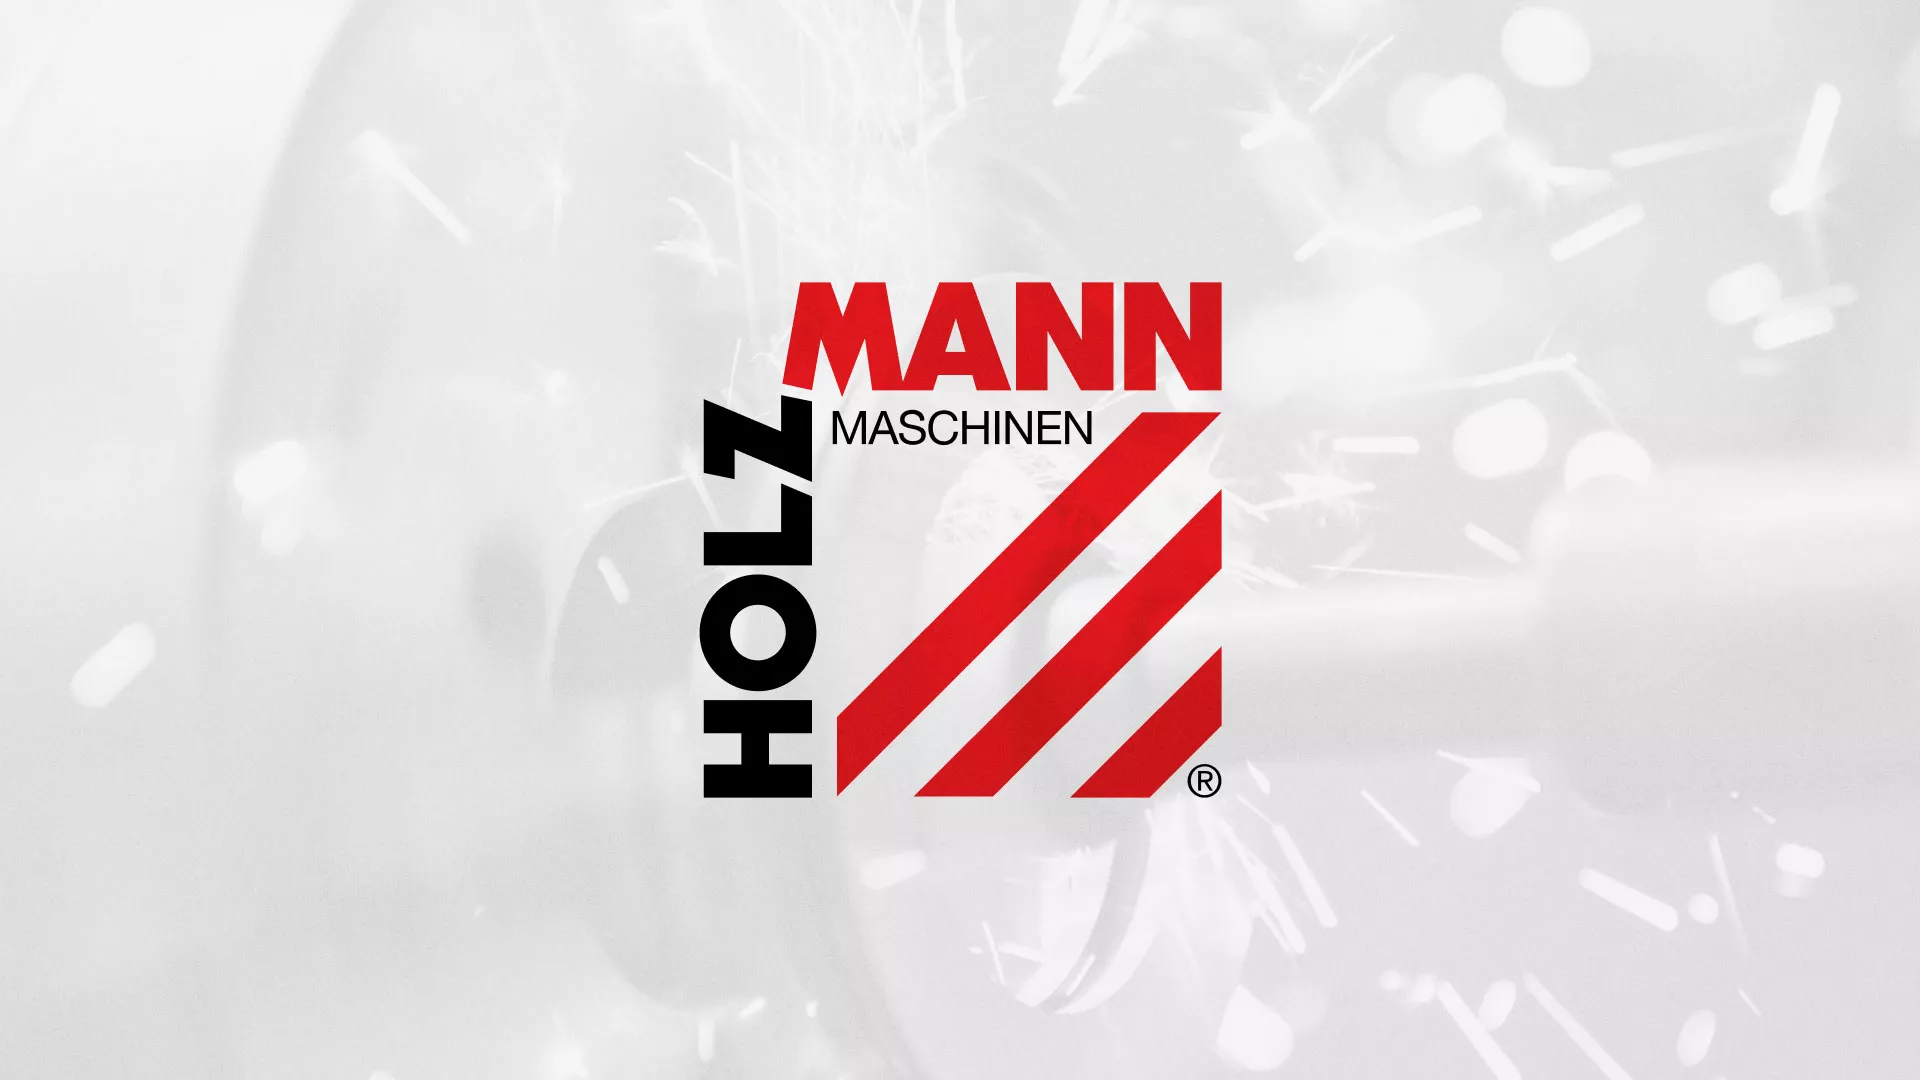 Создание сайта компании «HOLZMANN Maschinen GmbH» в Самаре